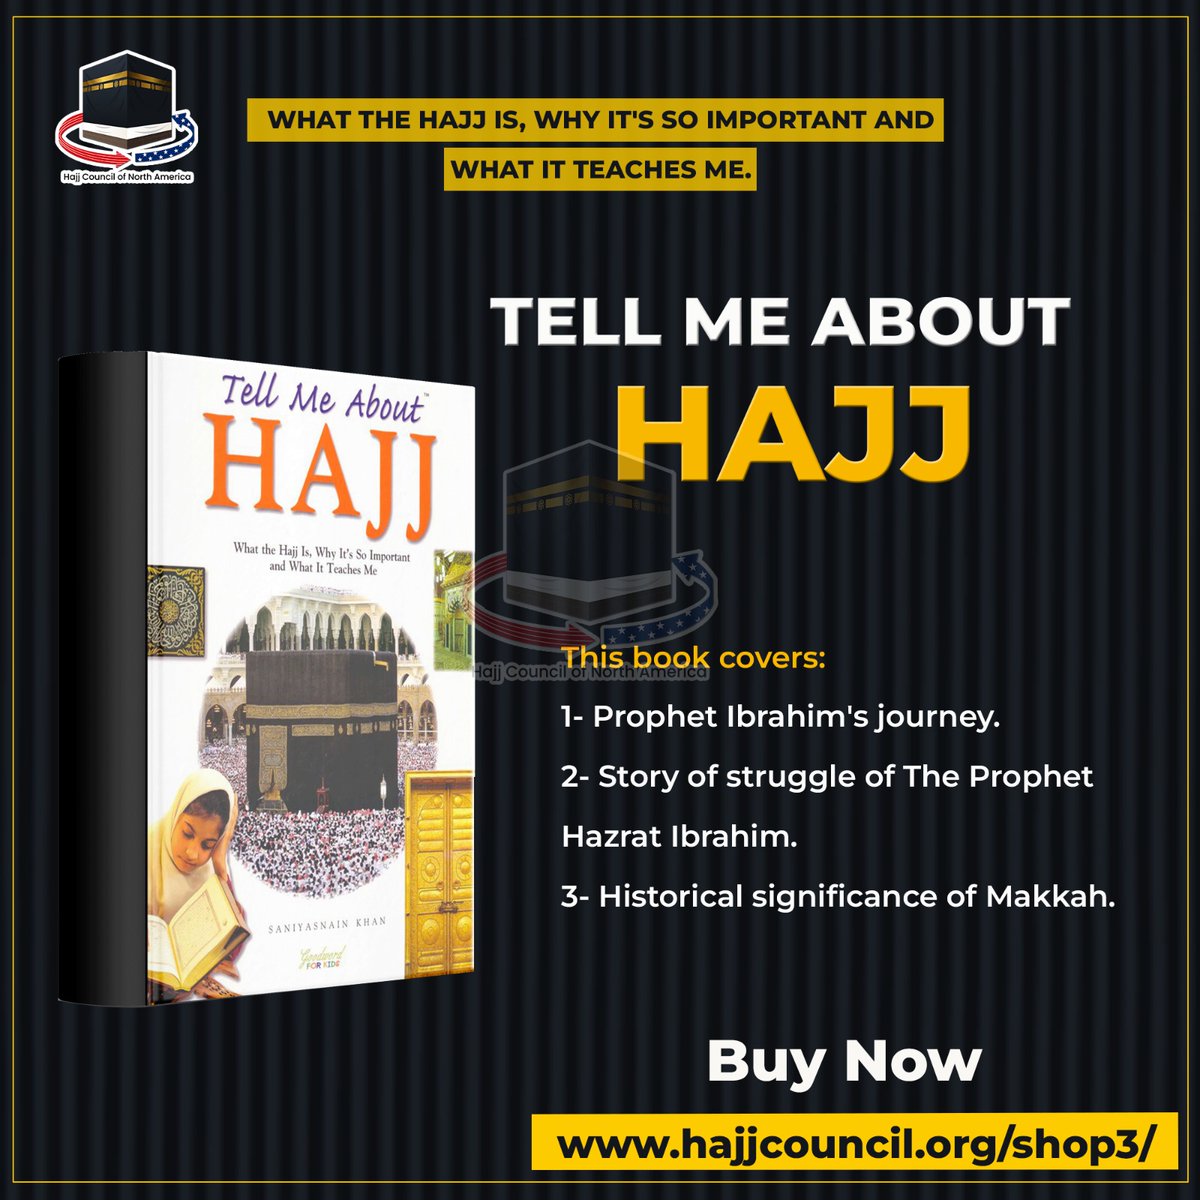 Get ready for your Hajj journey with 'Tell me about Hajj' (Paperback). 
Buy Now: hajjcouncil.org/shop3/

#HajjGuidanceBook #JourneyOfALifetime #PreAndPostPilgrimage #SignificanceOfHajj #QuranAndSunnah #getyoursnow #hajj #umrah #hajj2023 #UmrahVisa #nuskha